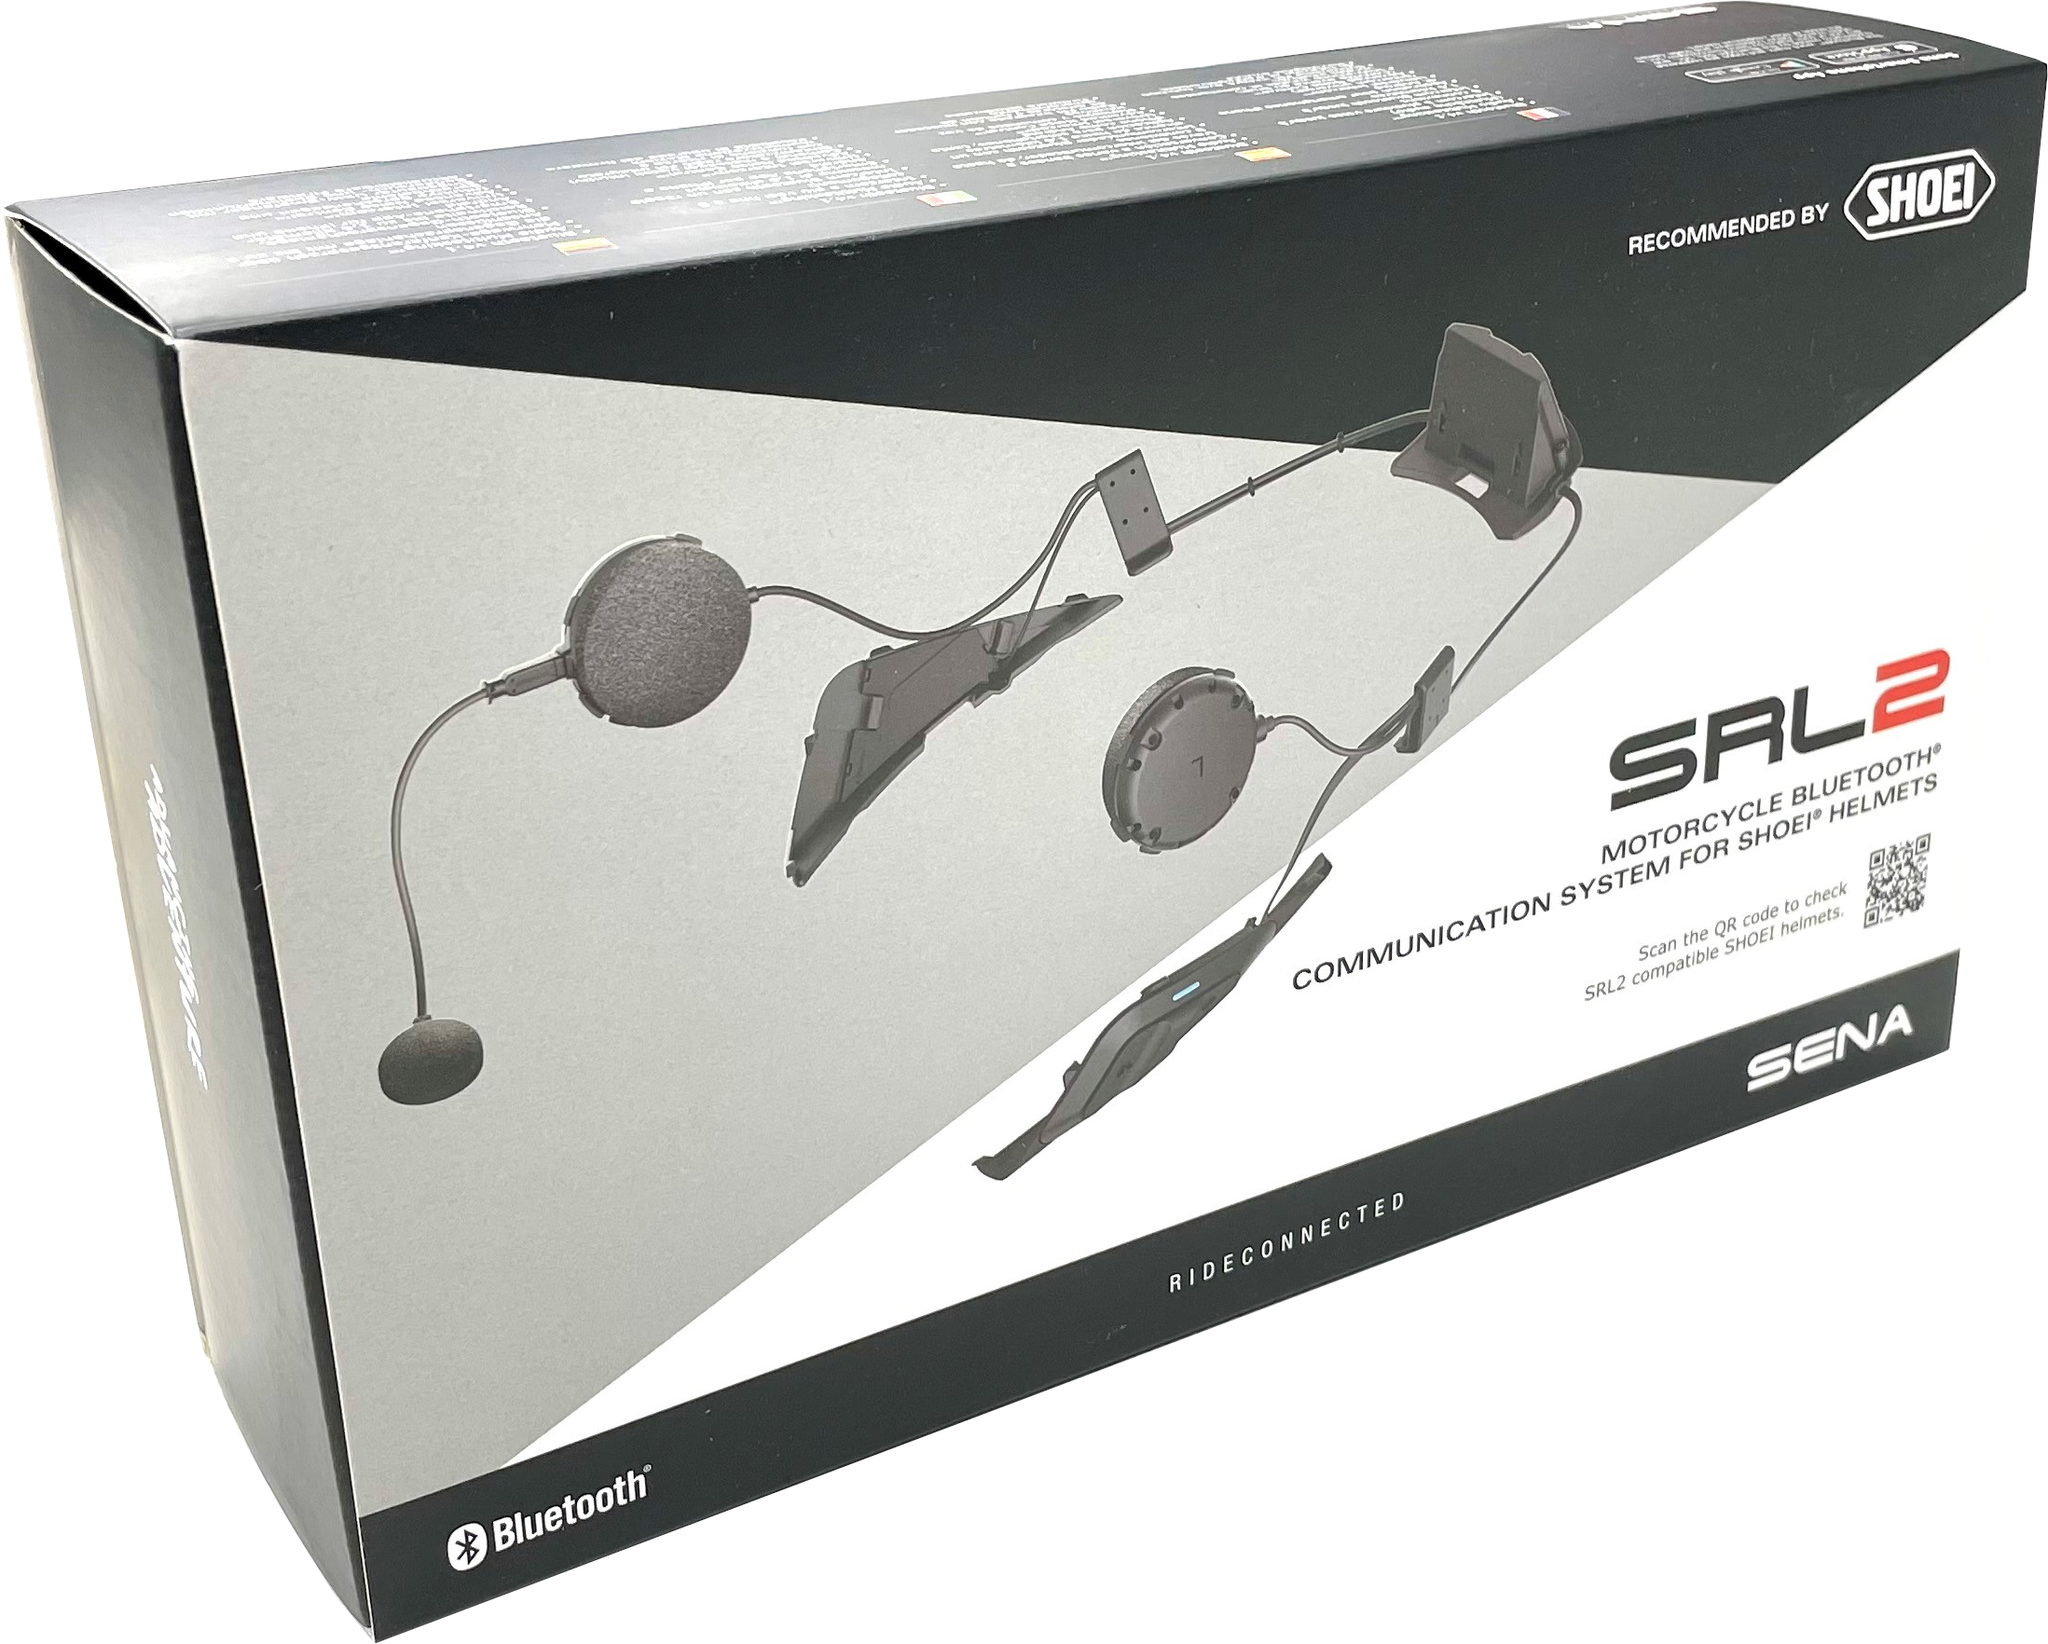 Shoei SRL2 - Communicationsystem